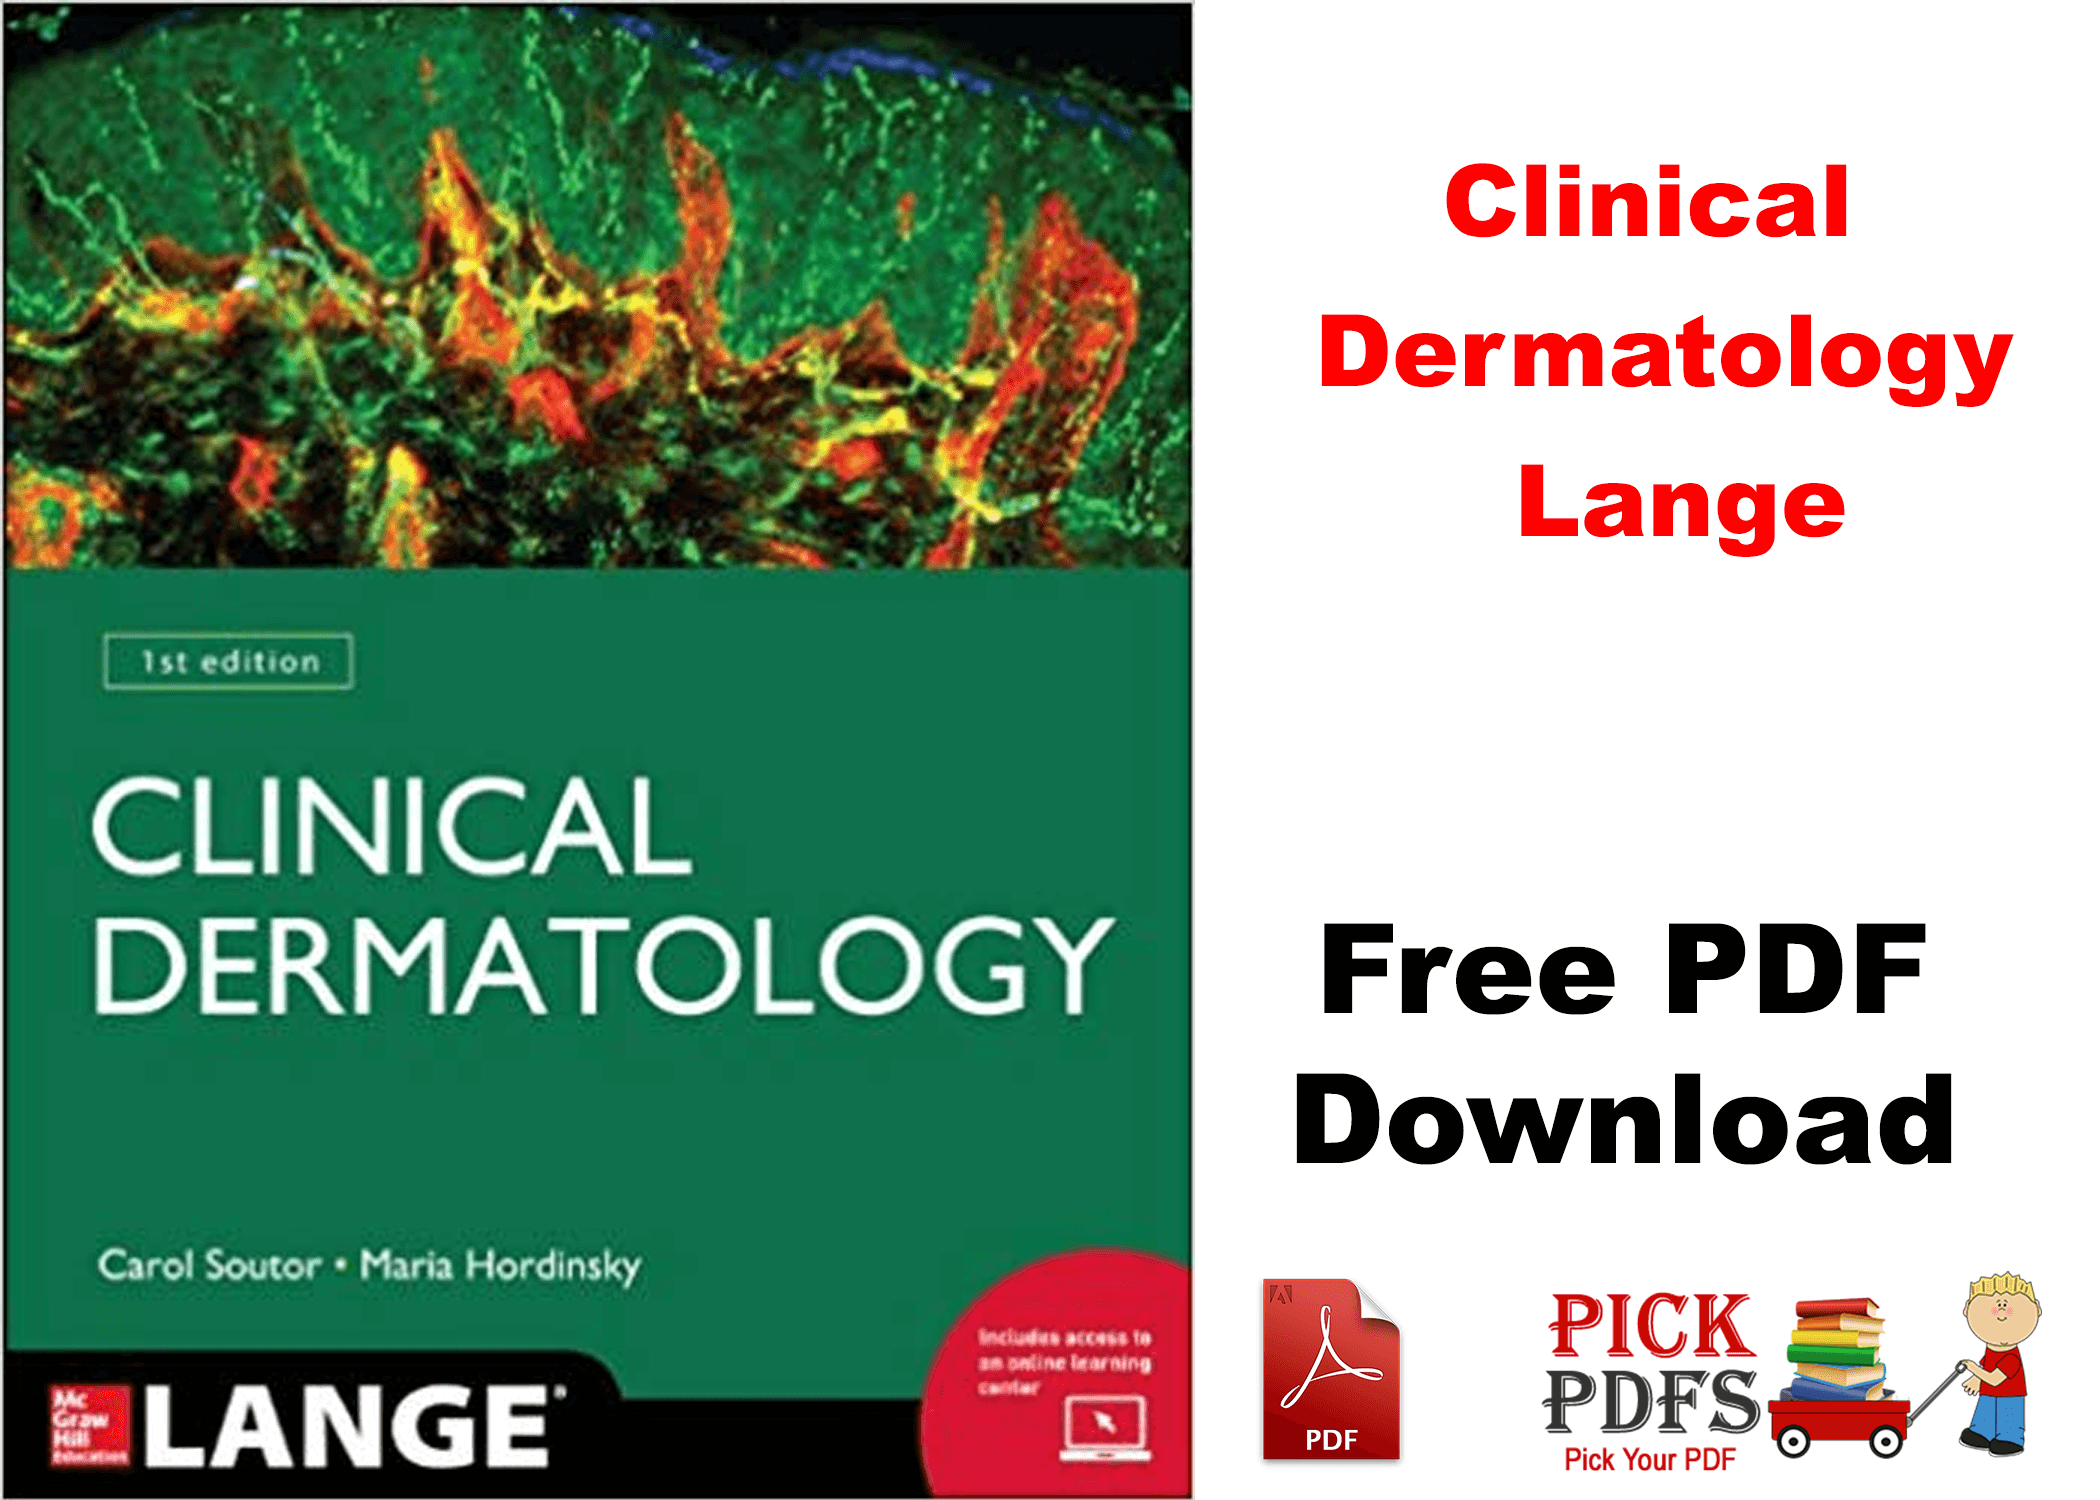 https://pickpdfs.com/clinical-dermatology-lange-pdf-1st-edition-ebook-free-download/